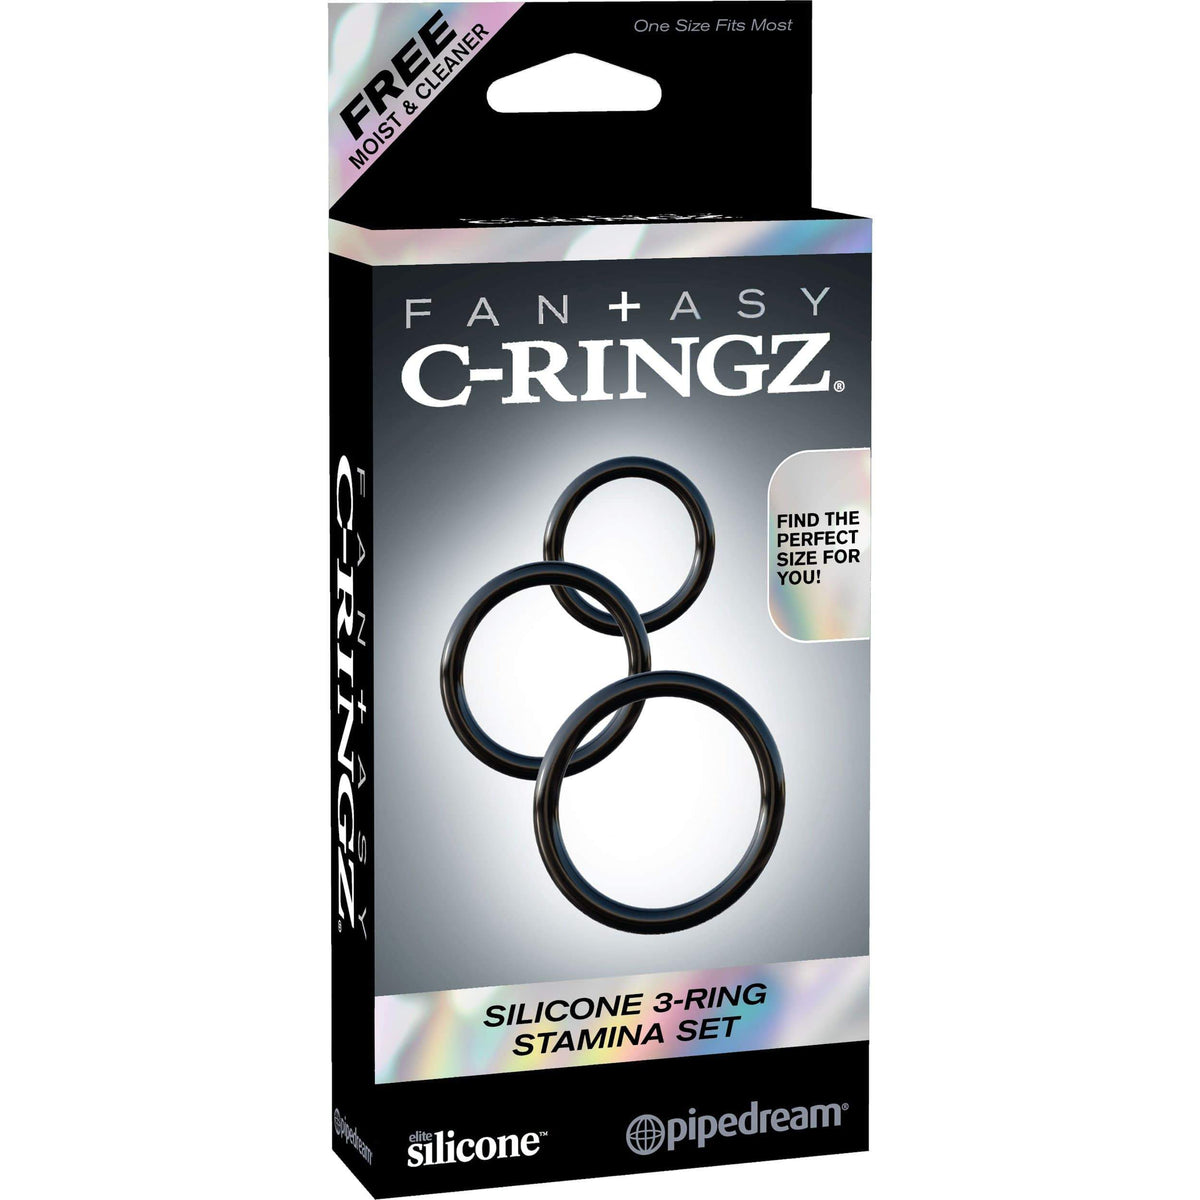 Pipedream - Fantasy C Ringz Silicone 3 Ring Stamina Set (Black) -  Silicone Cock Ring (Non Vibration)  Durio.sg